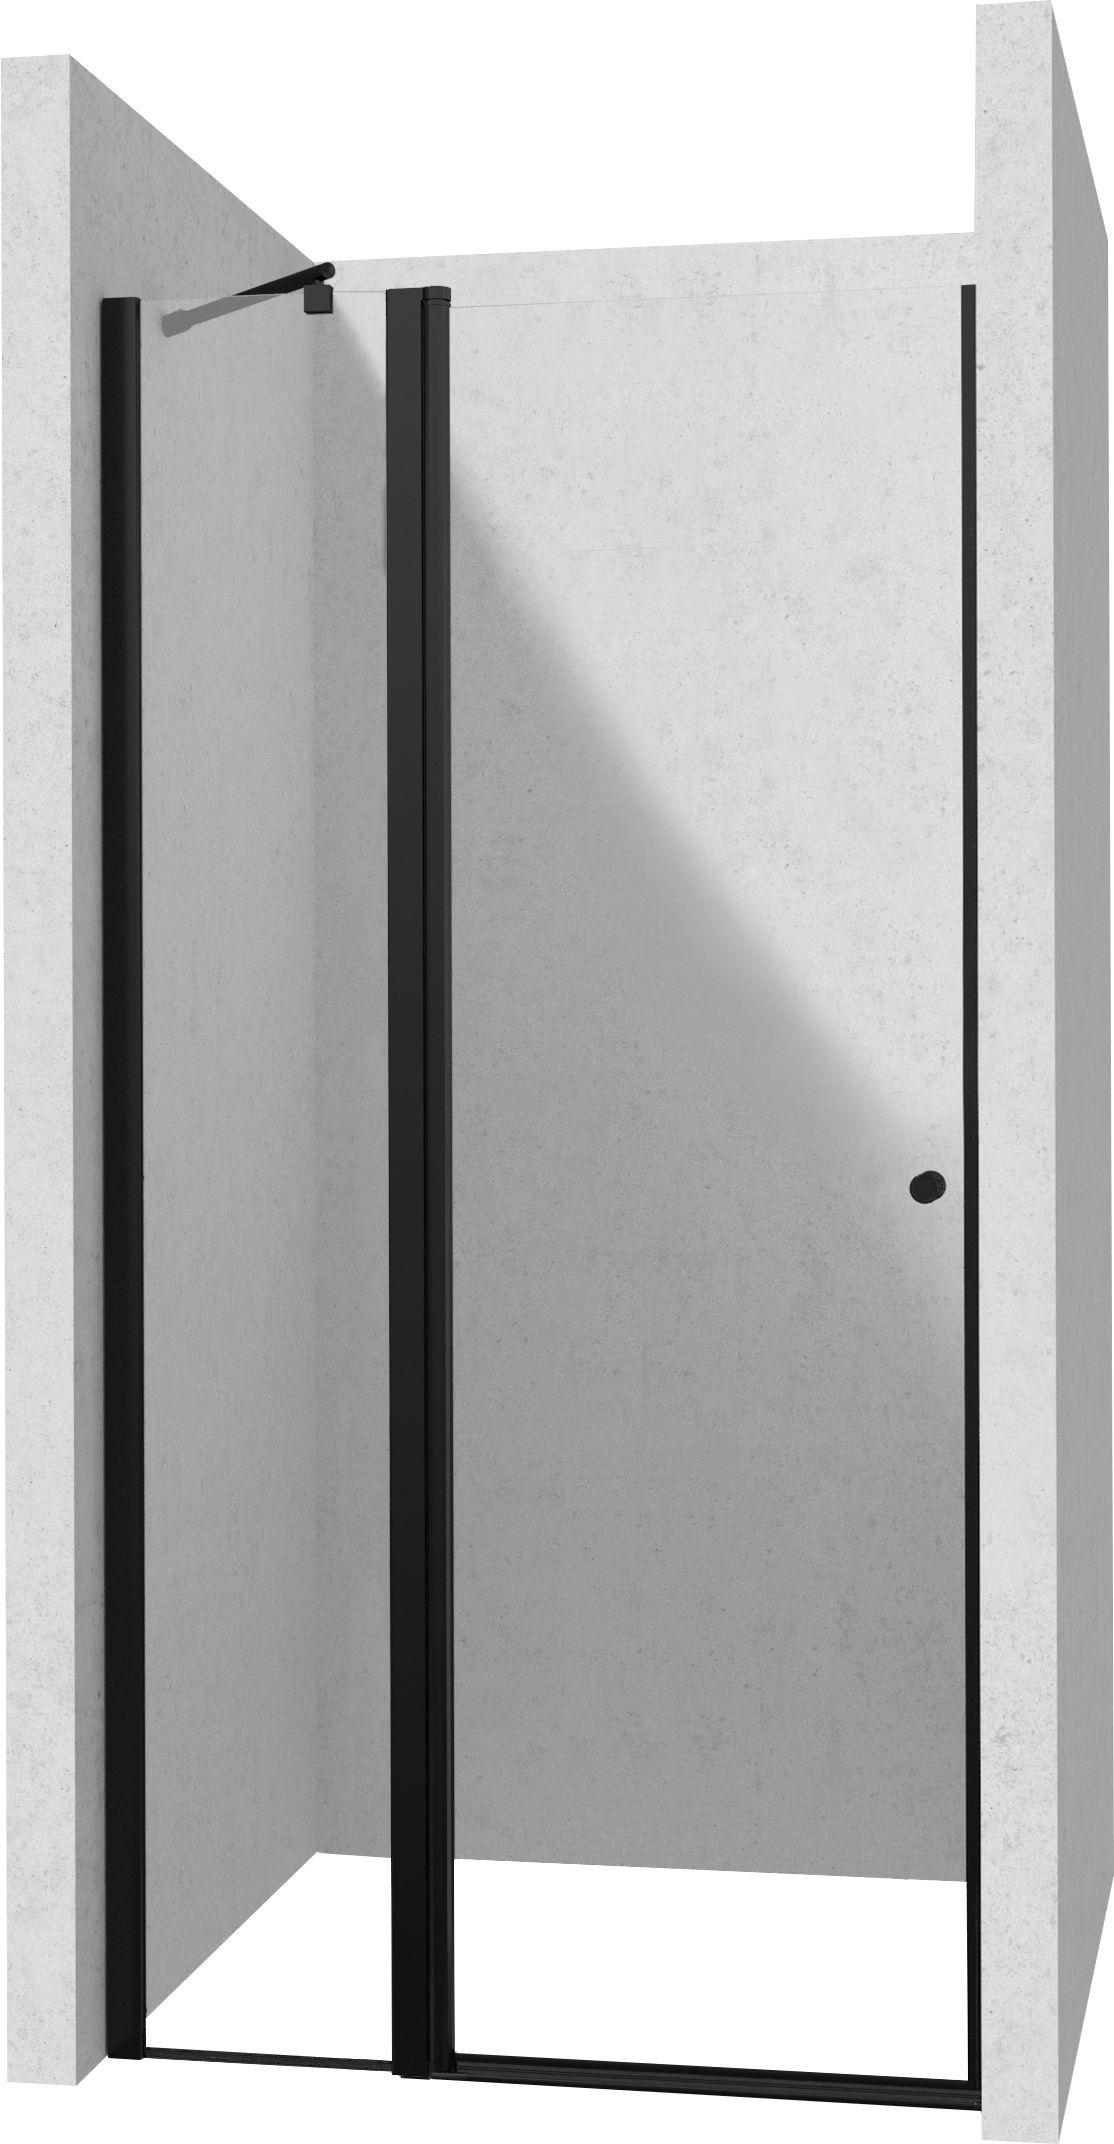 Shower doors, 120 cm - hinged - KTSUN45P - Główne zdjęcie produktowe